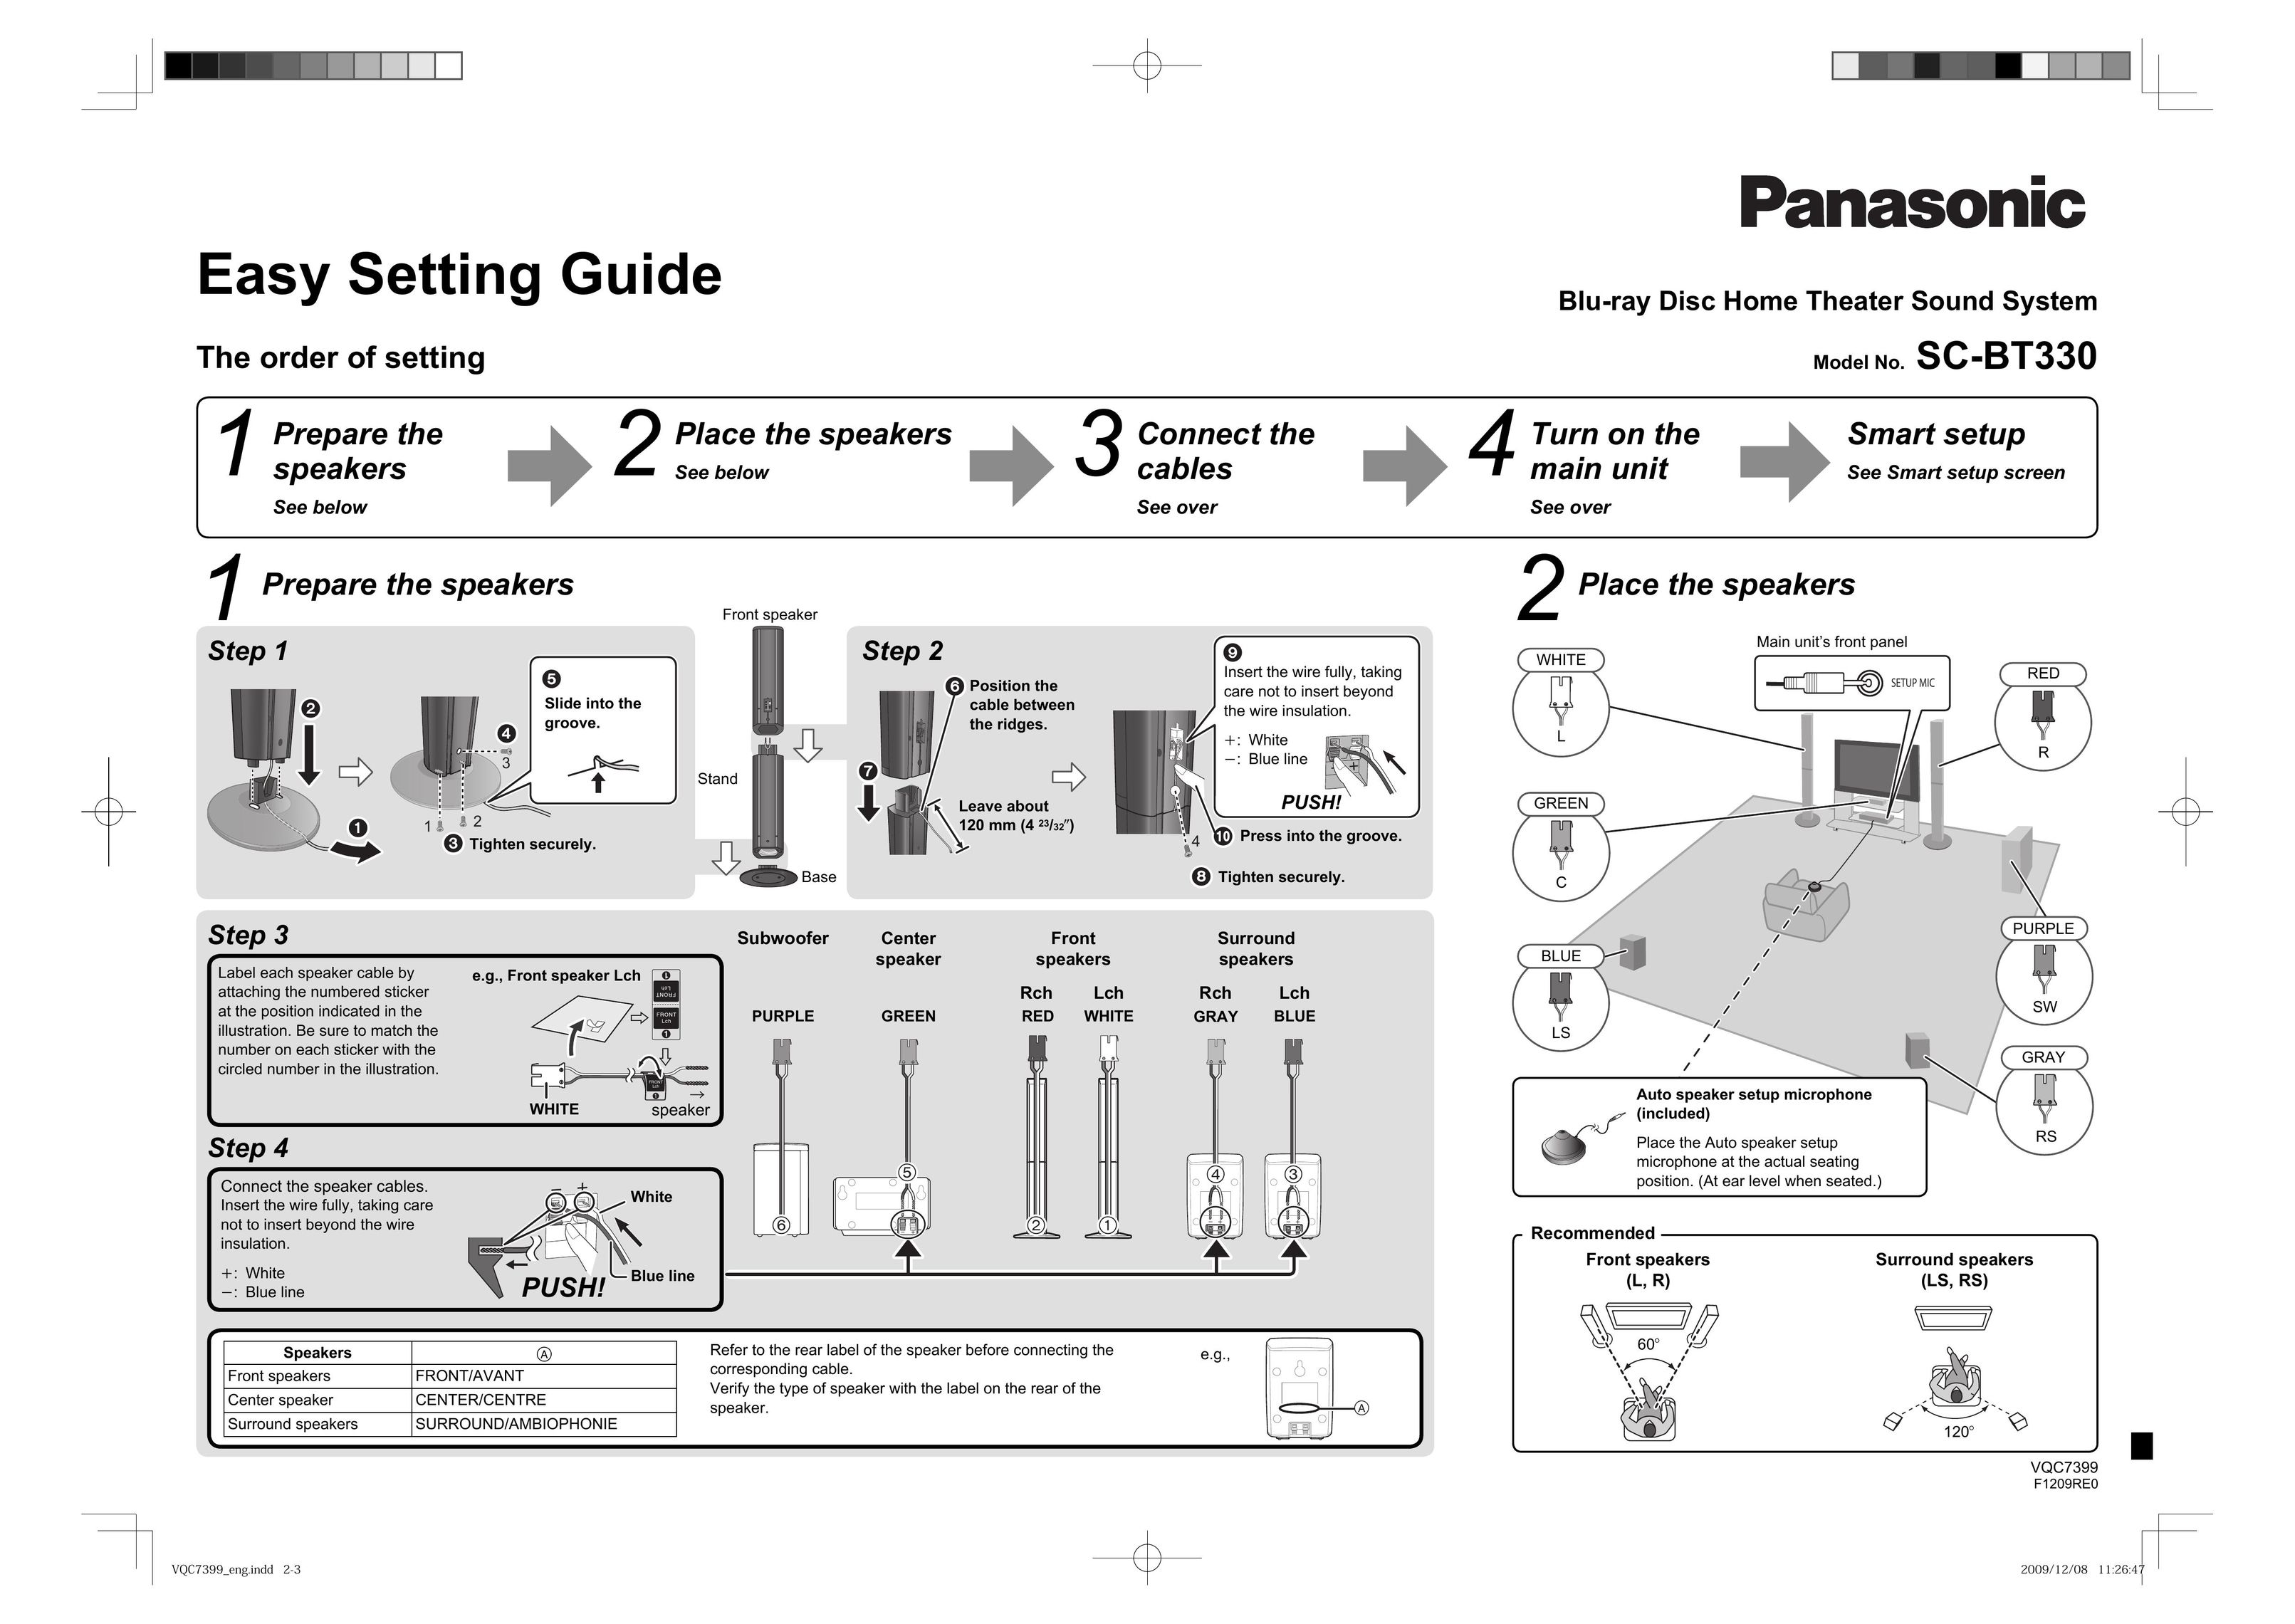 Panasonic SABT7399 Home Theater System User Manual